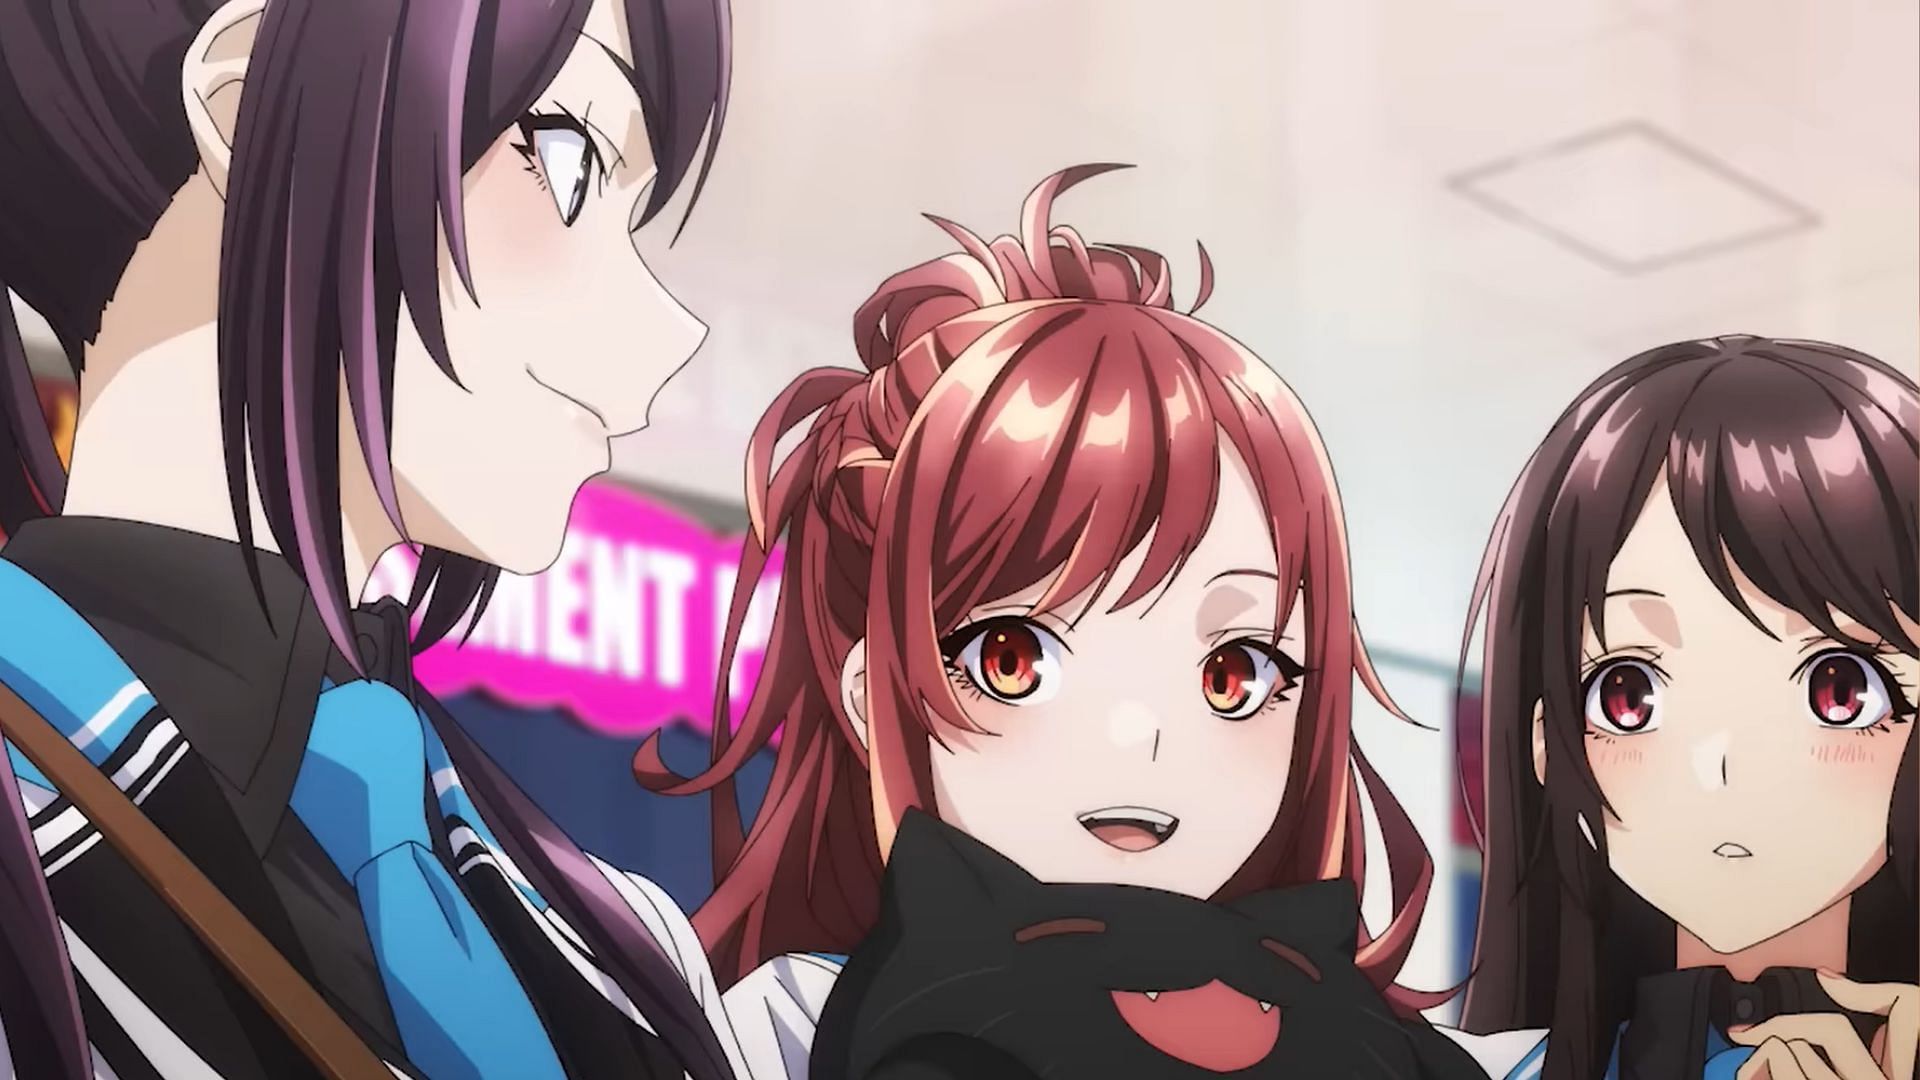 Kanzaki, Kaede, and Kaori as seen in the anime (Image via Millepensee)